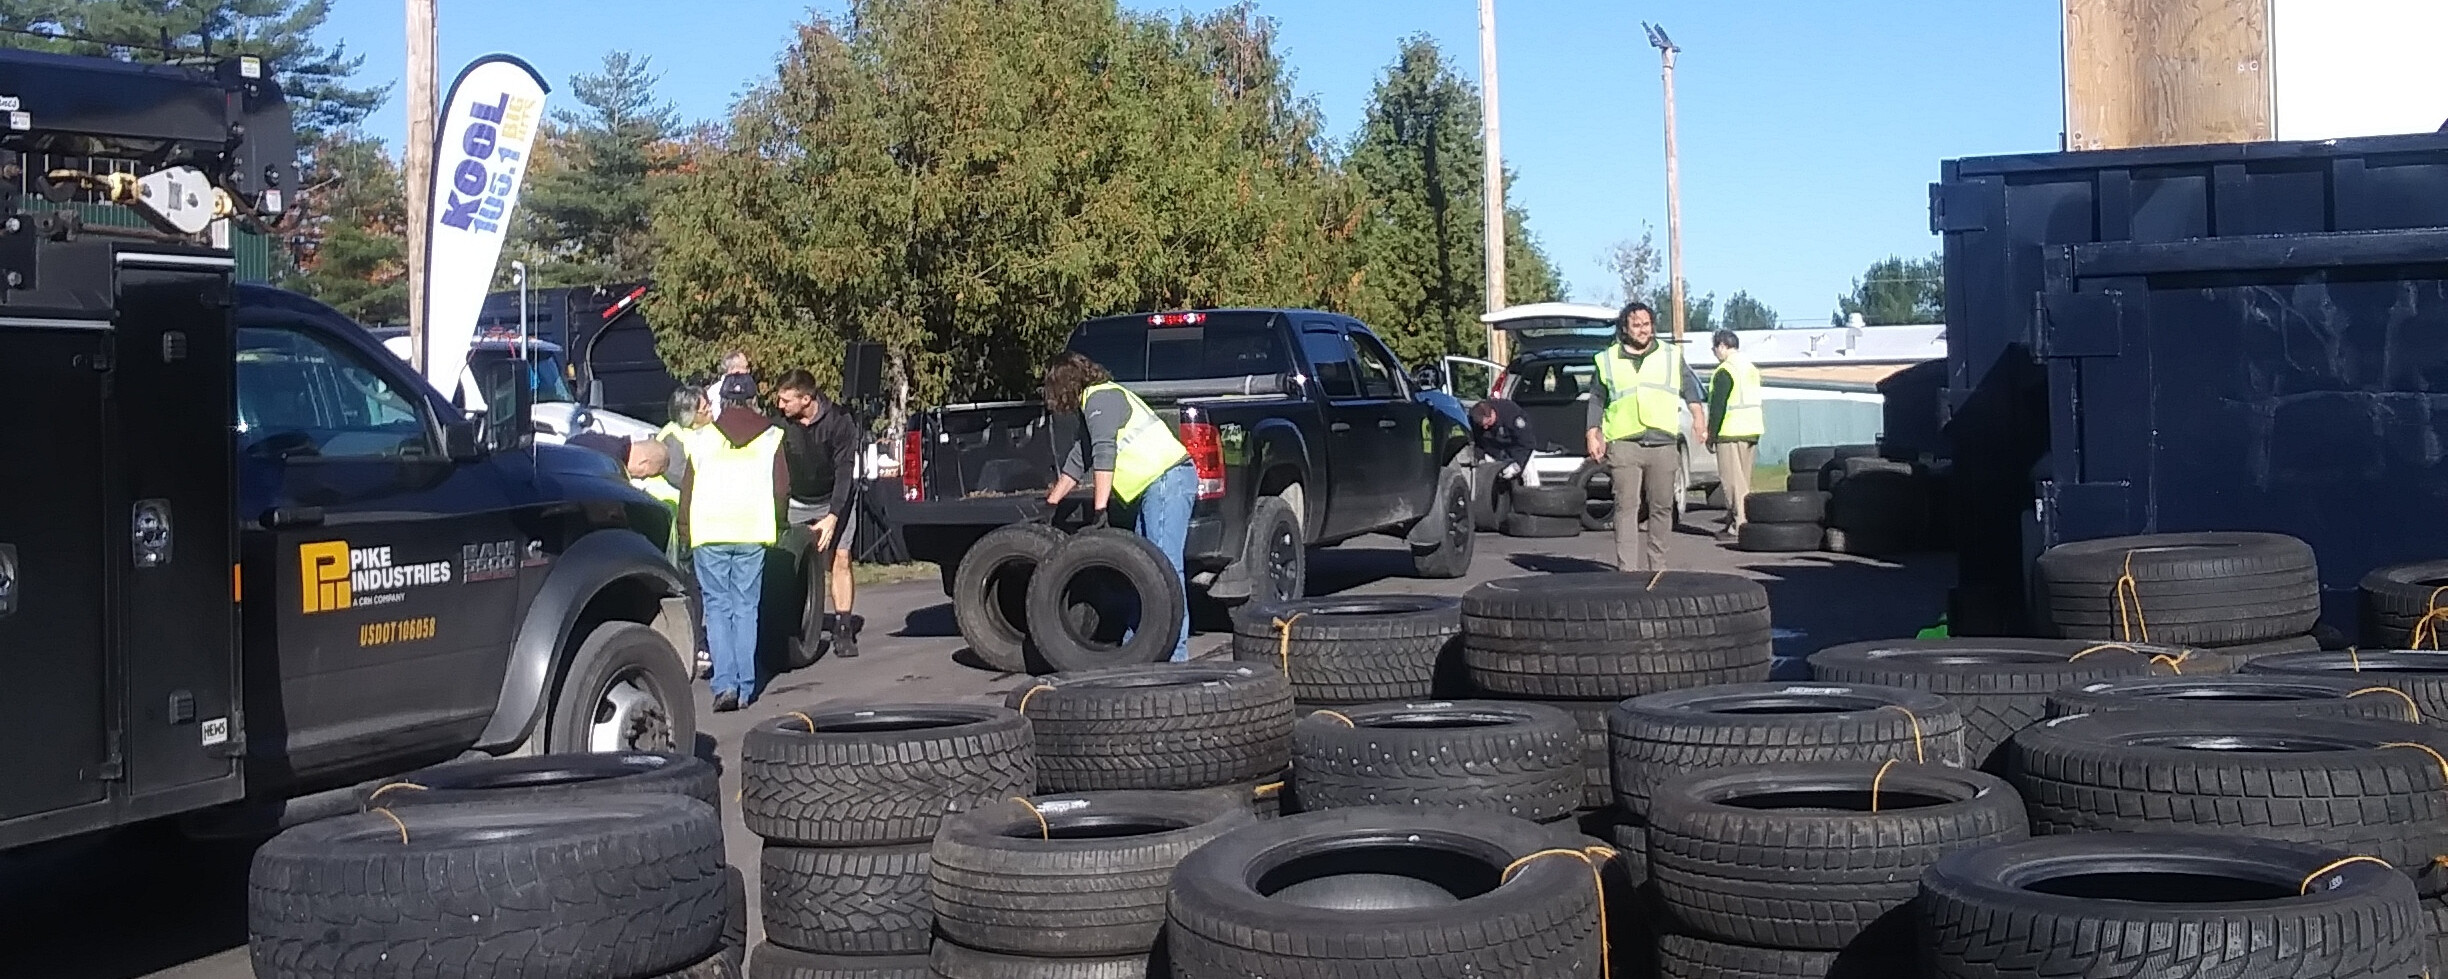 car tires and volunteers